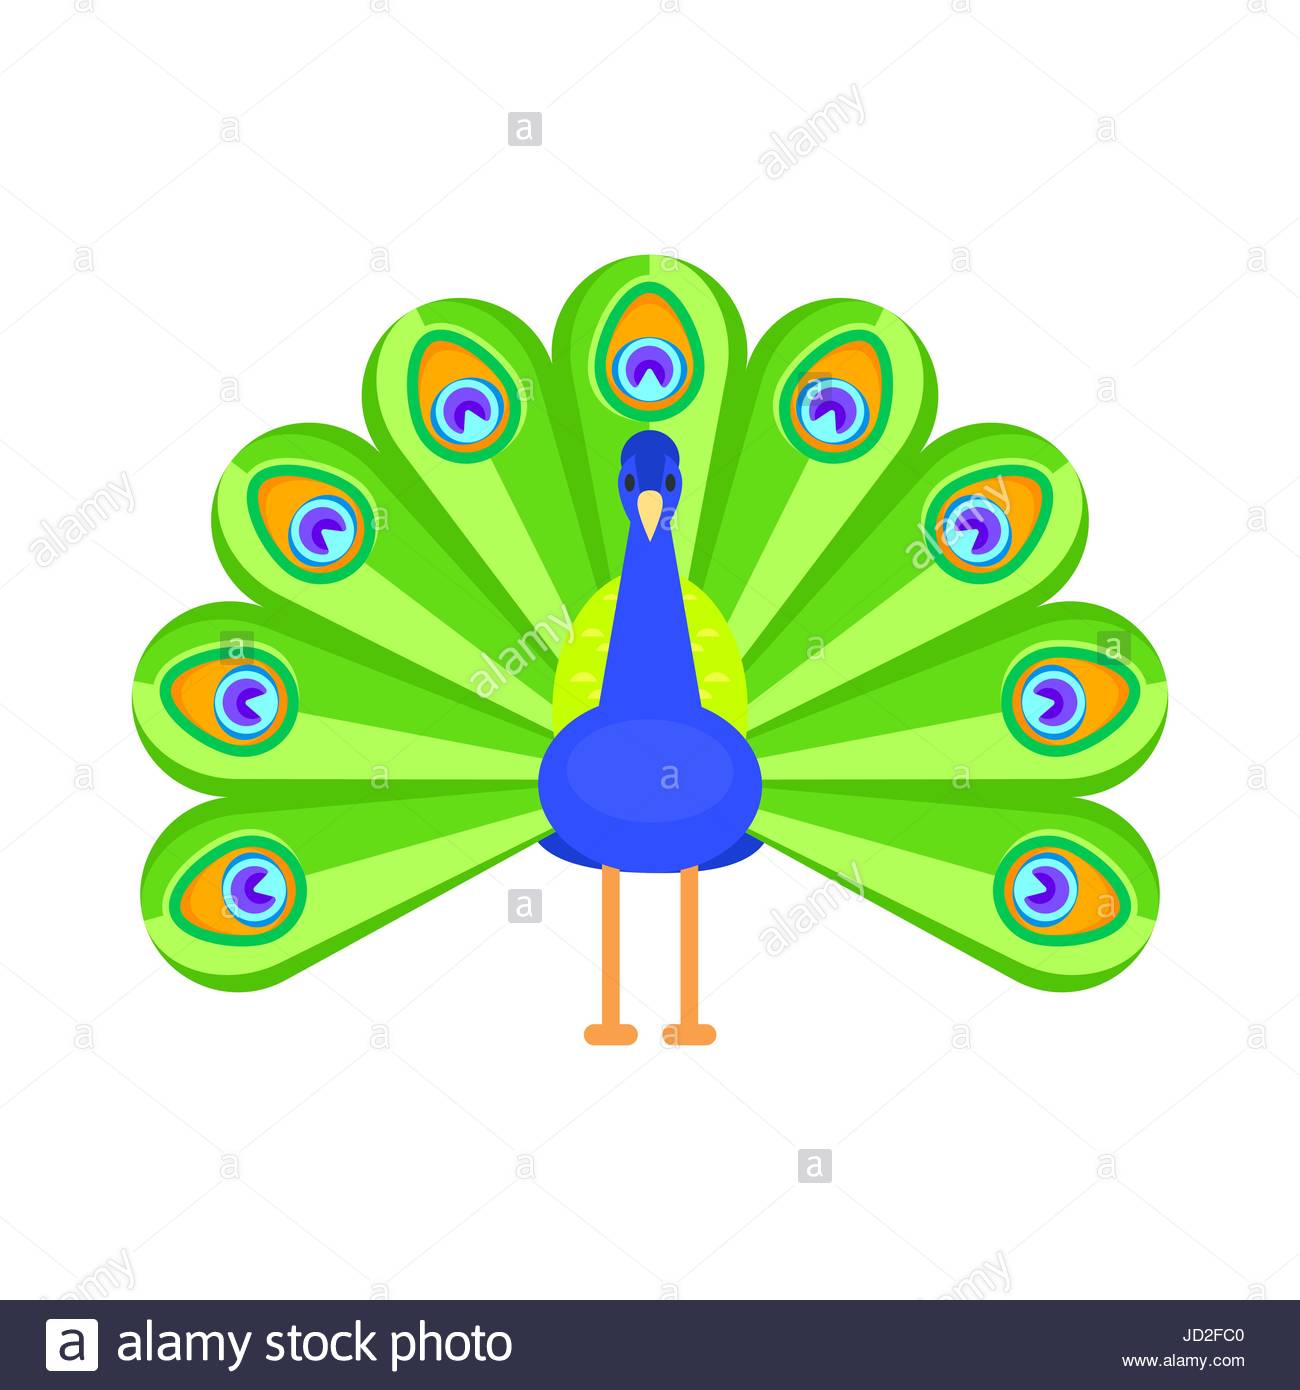 Peacock icons | Noun Project